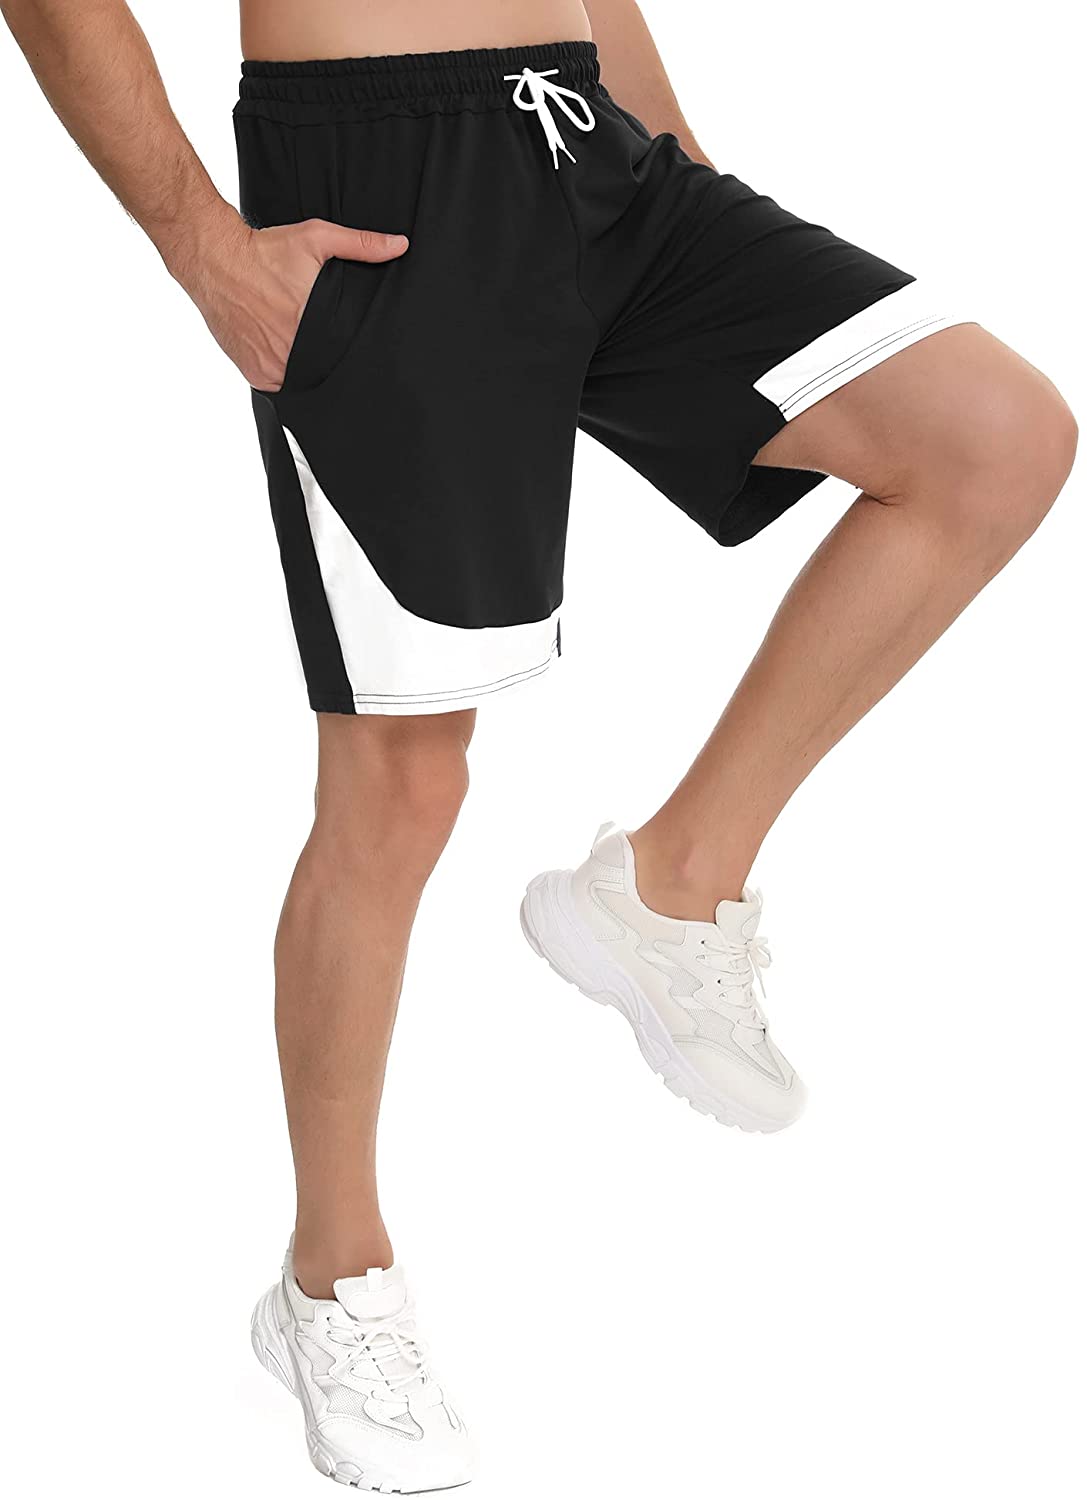 Doaraha Shorts Sport Herren Jogginghose Kurz Sweathose mit Bündchen Taschen Kontrastfarbe, Sporthose Kurz Streifen Kurze Hose Herren